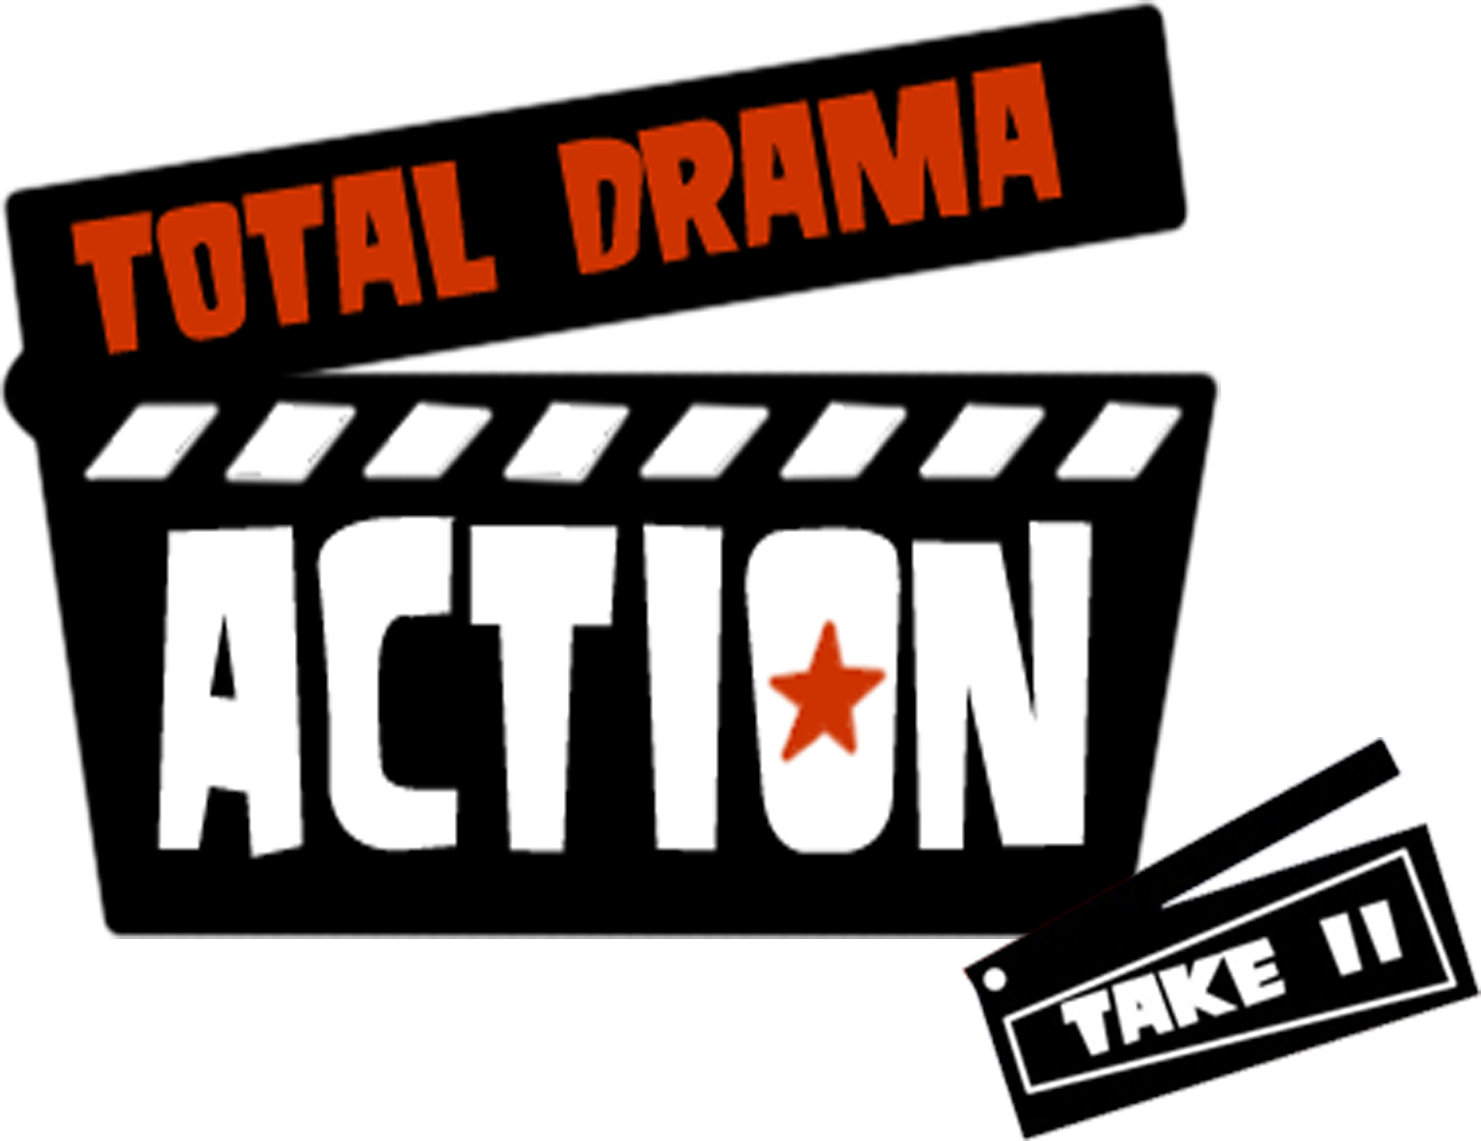 Total Drama Action: Take II | TDI: Take II Wiki | FANDOM powered by Wikia